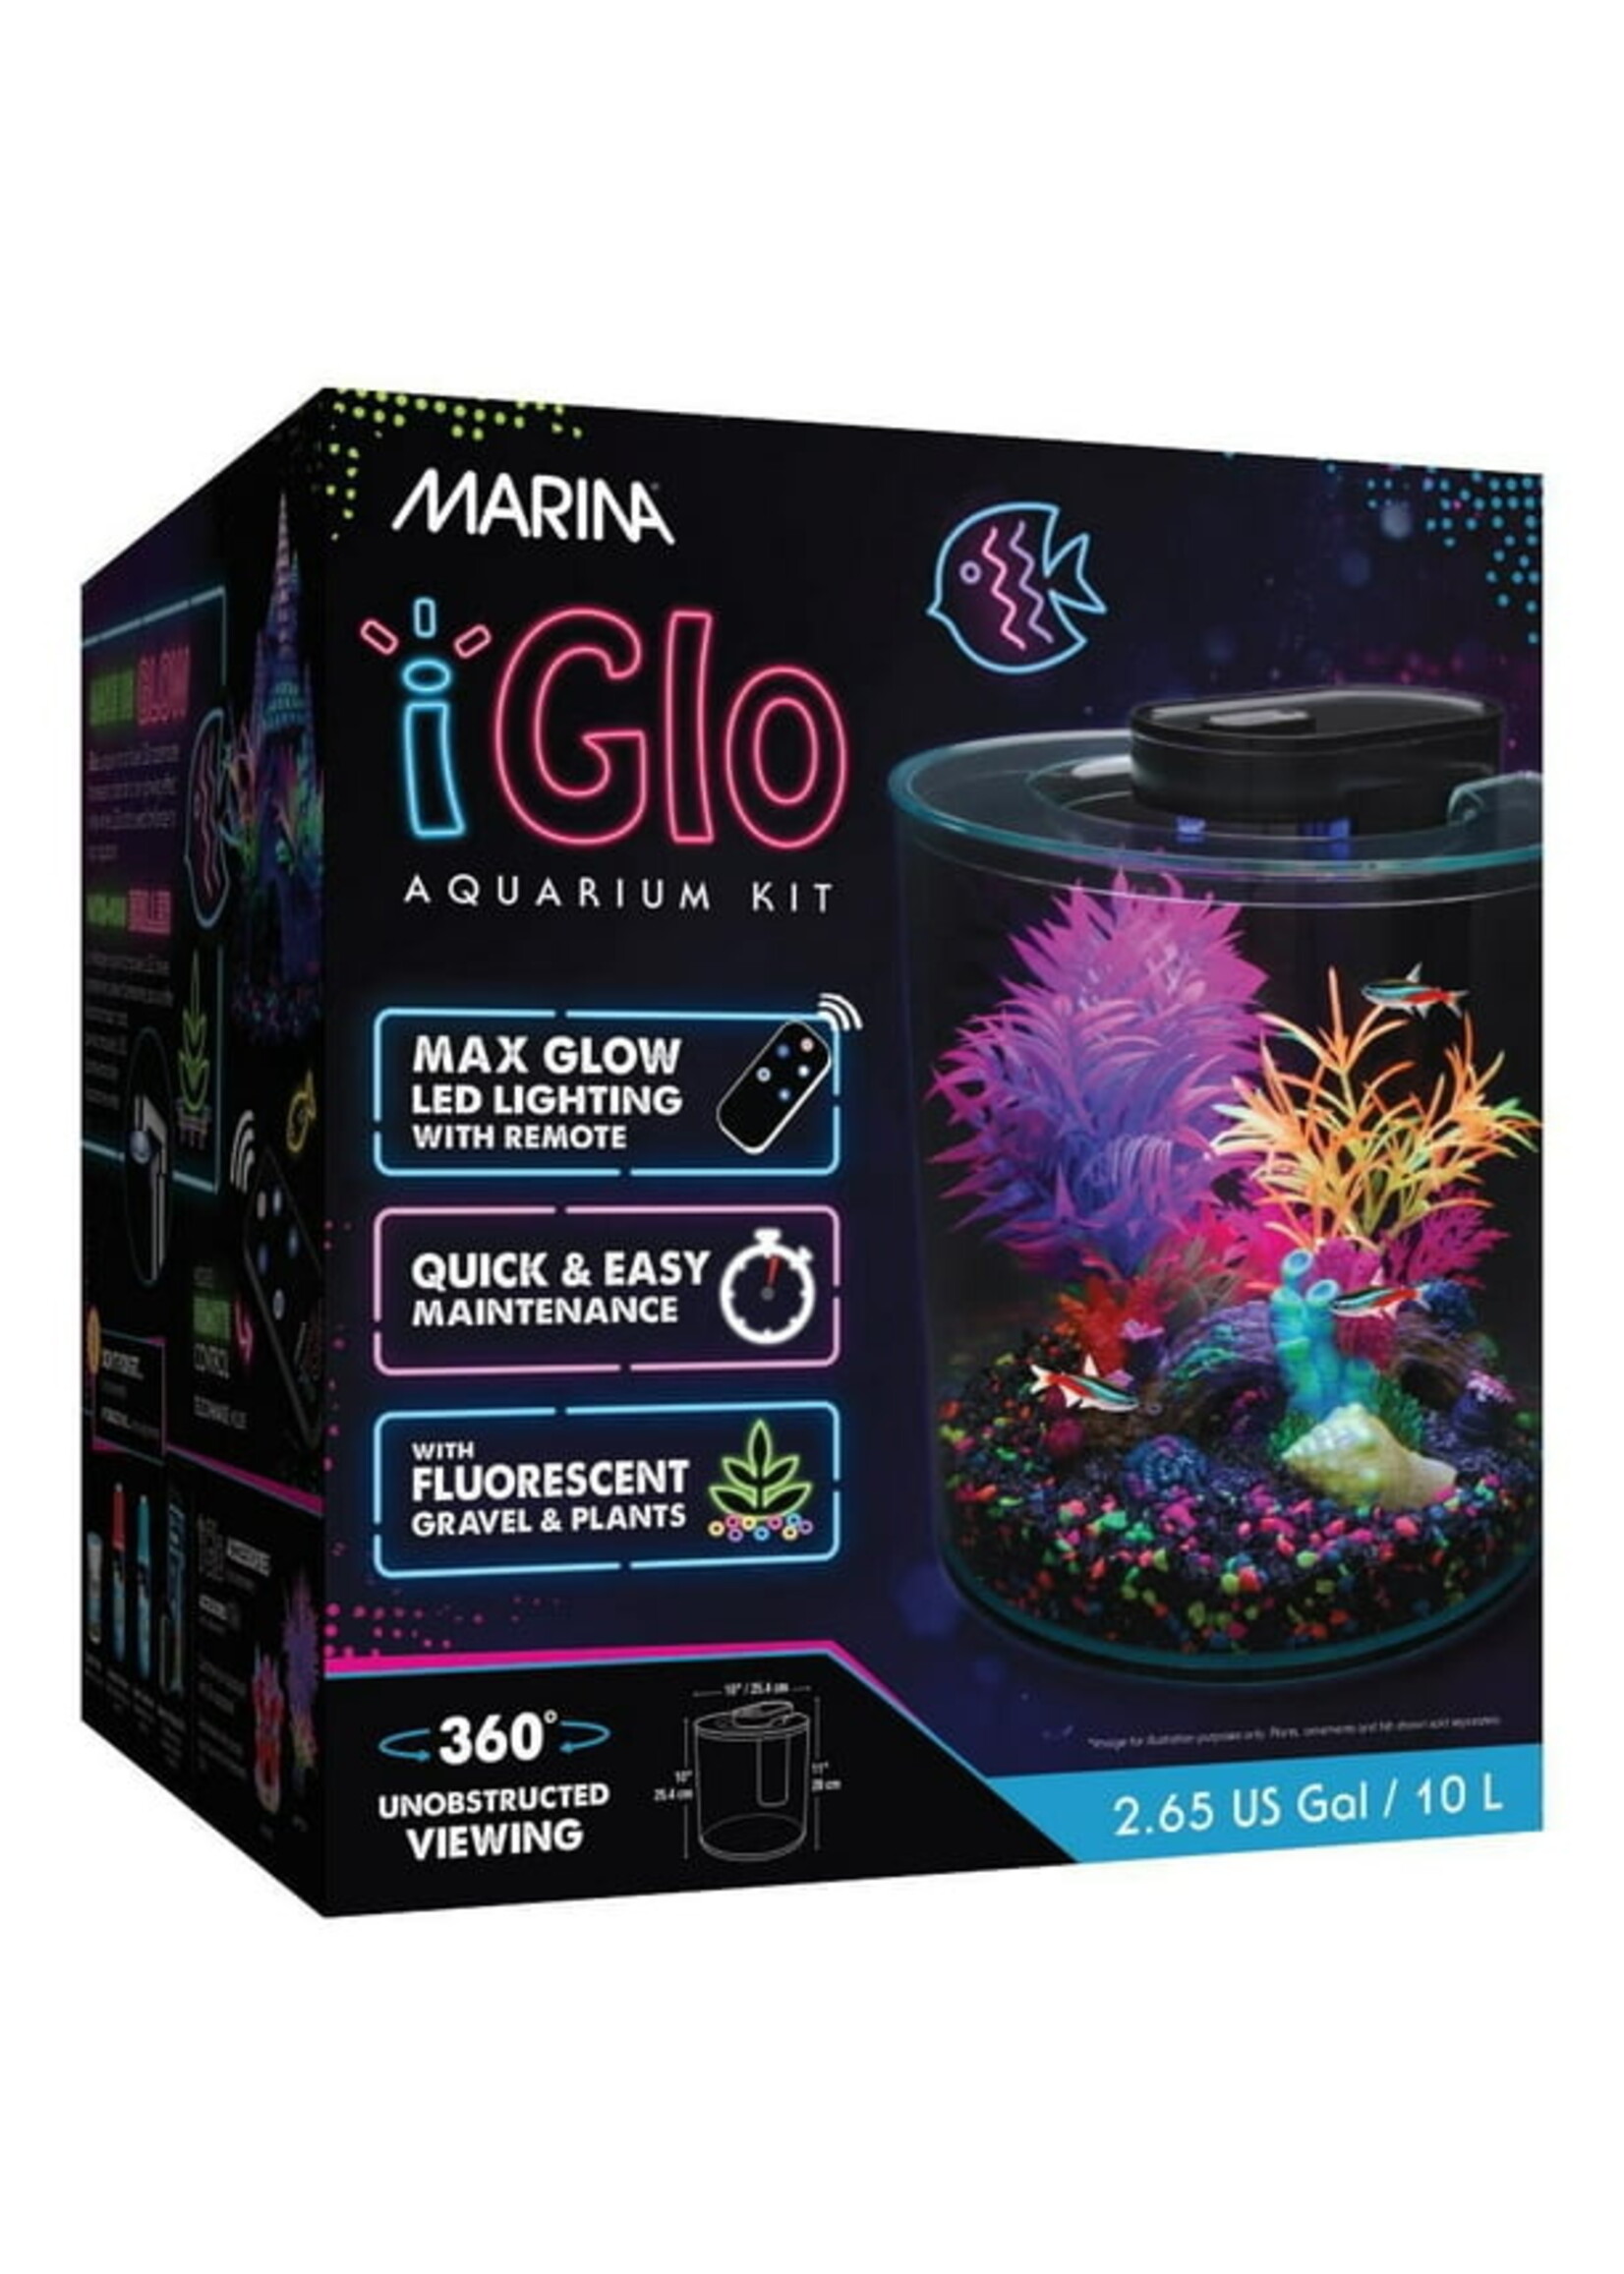 Marina Marina iGlo Aquarium Kit 2.65 U.S Gal